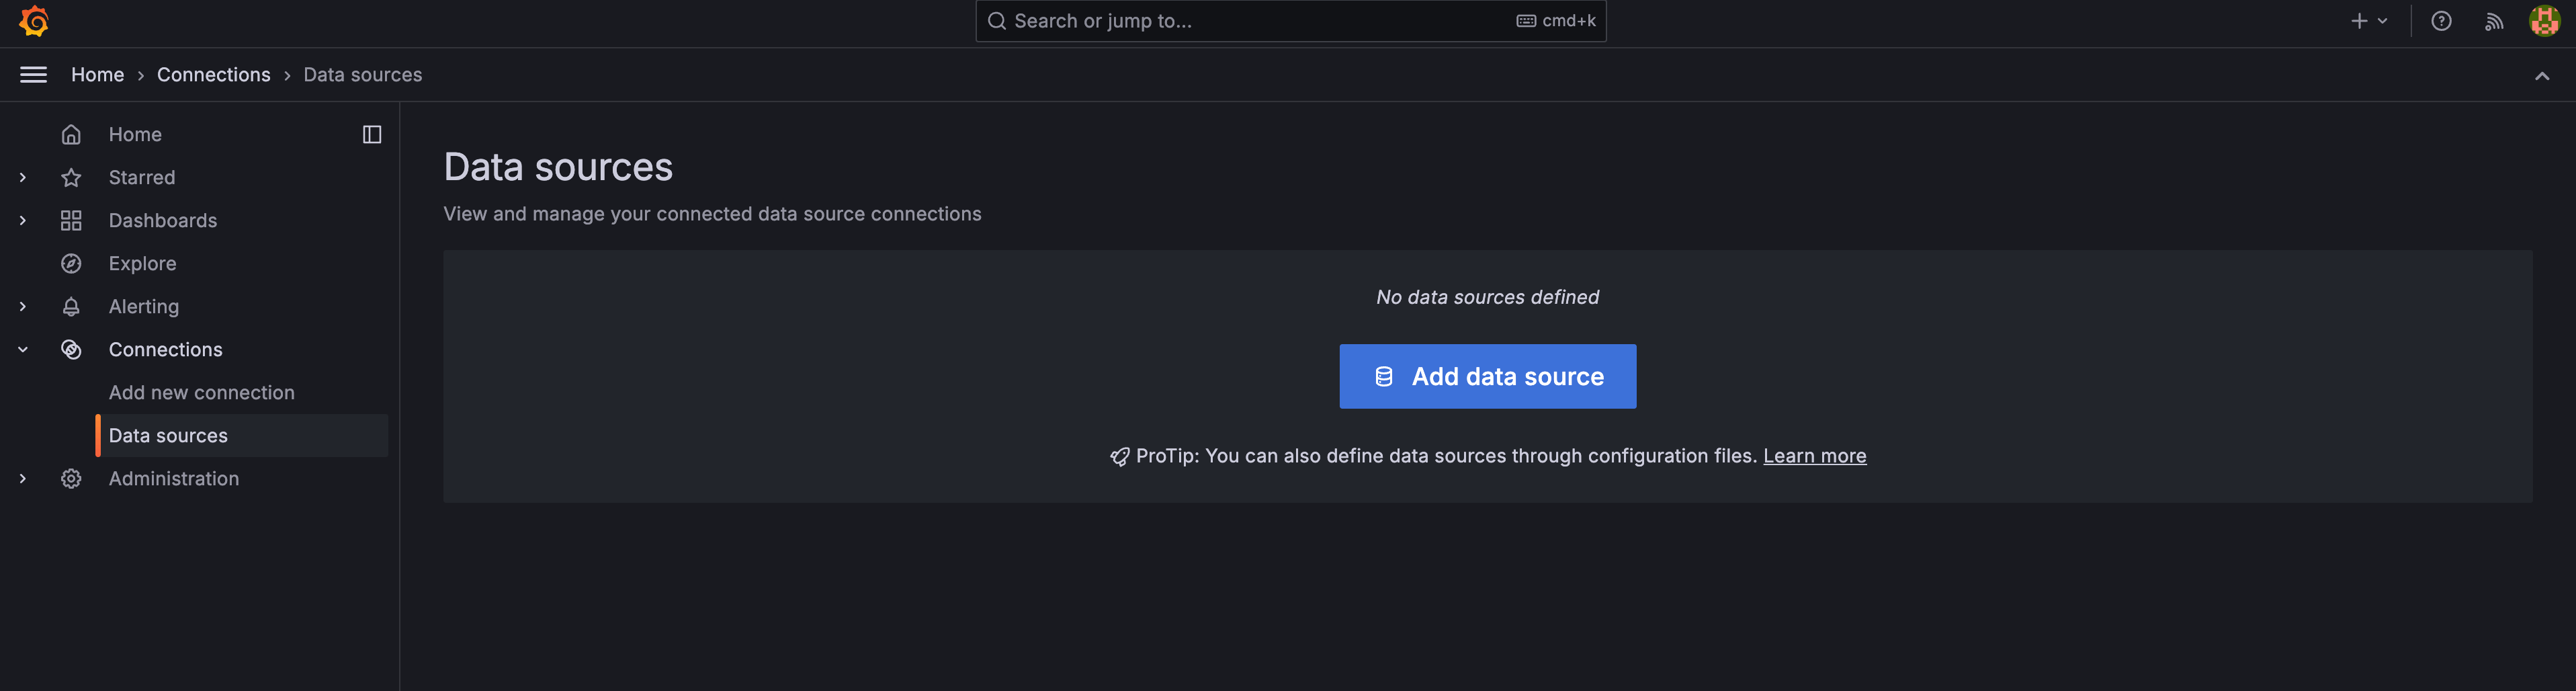 Add a data source